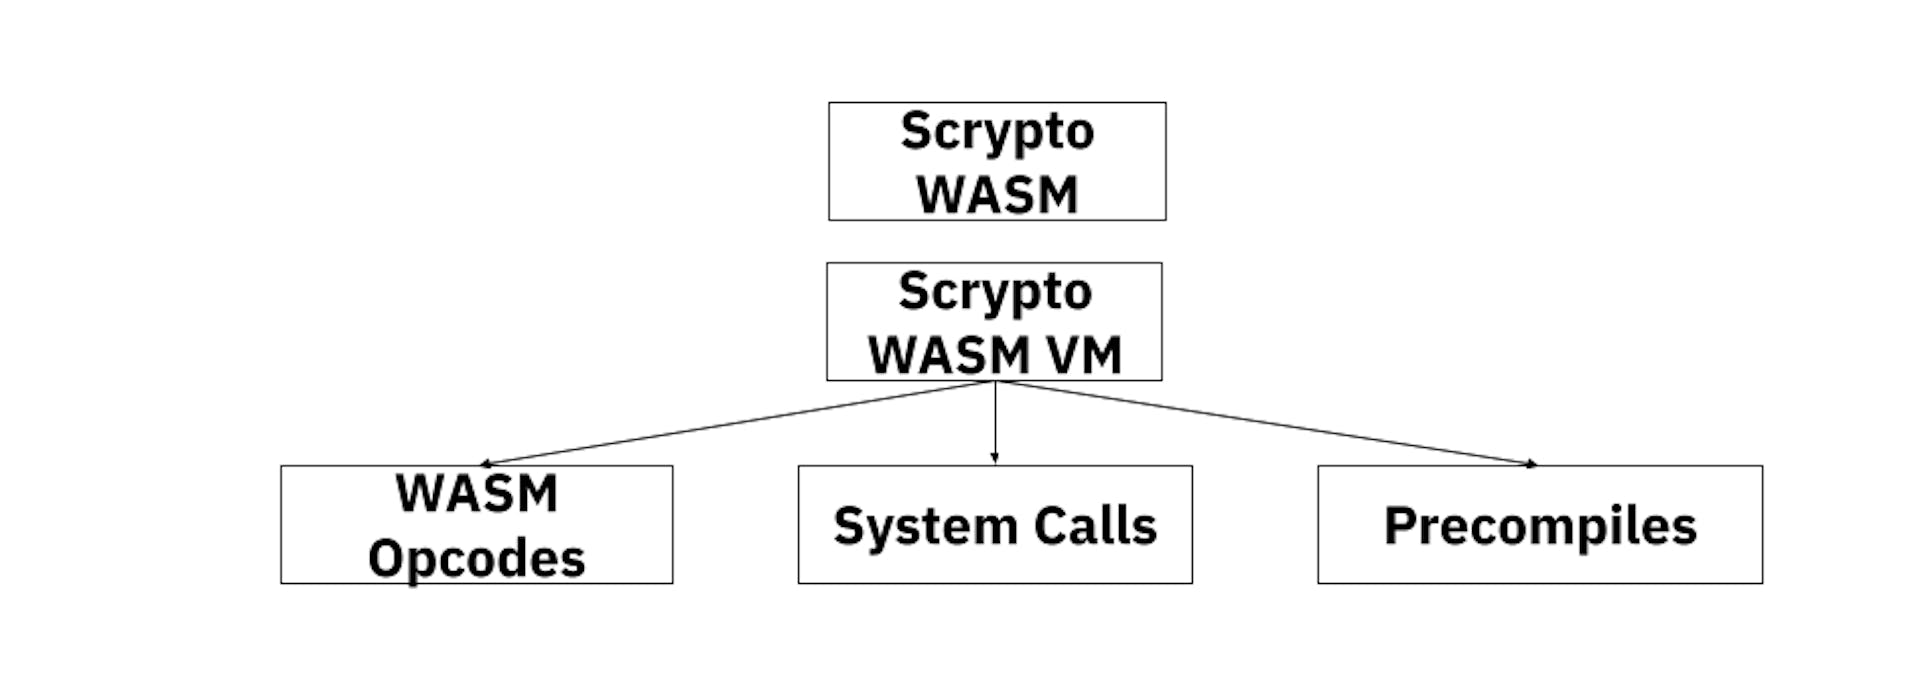 Scrypto WASM VM-Modell